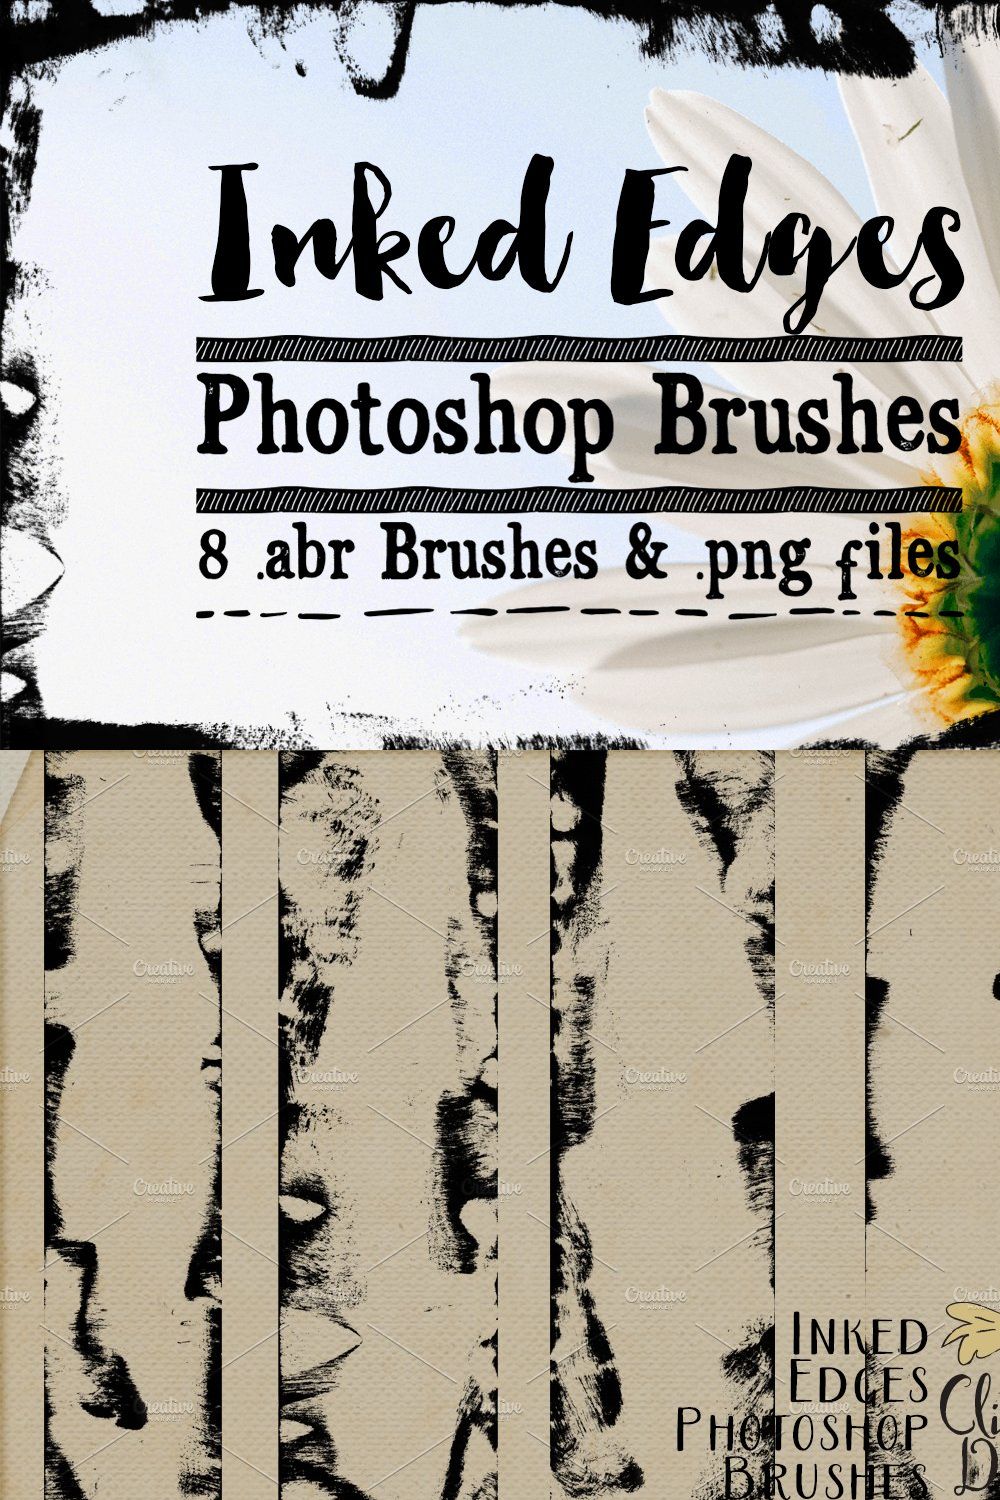 Inked Edge Photoshop Brushes pinterest preview image.